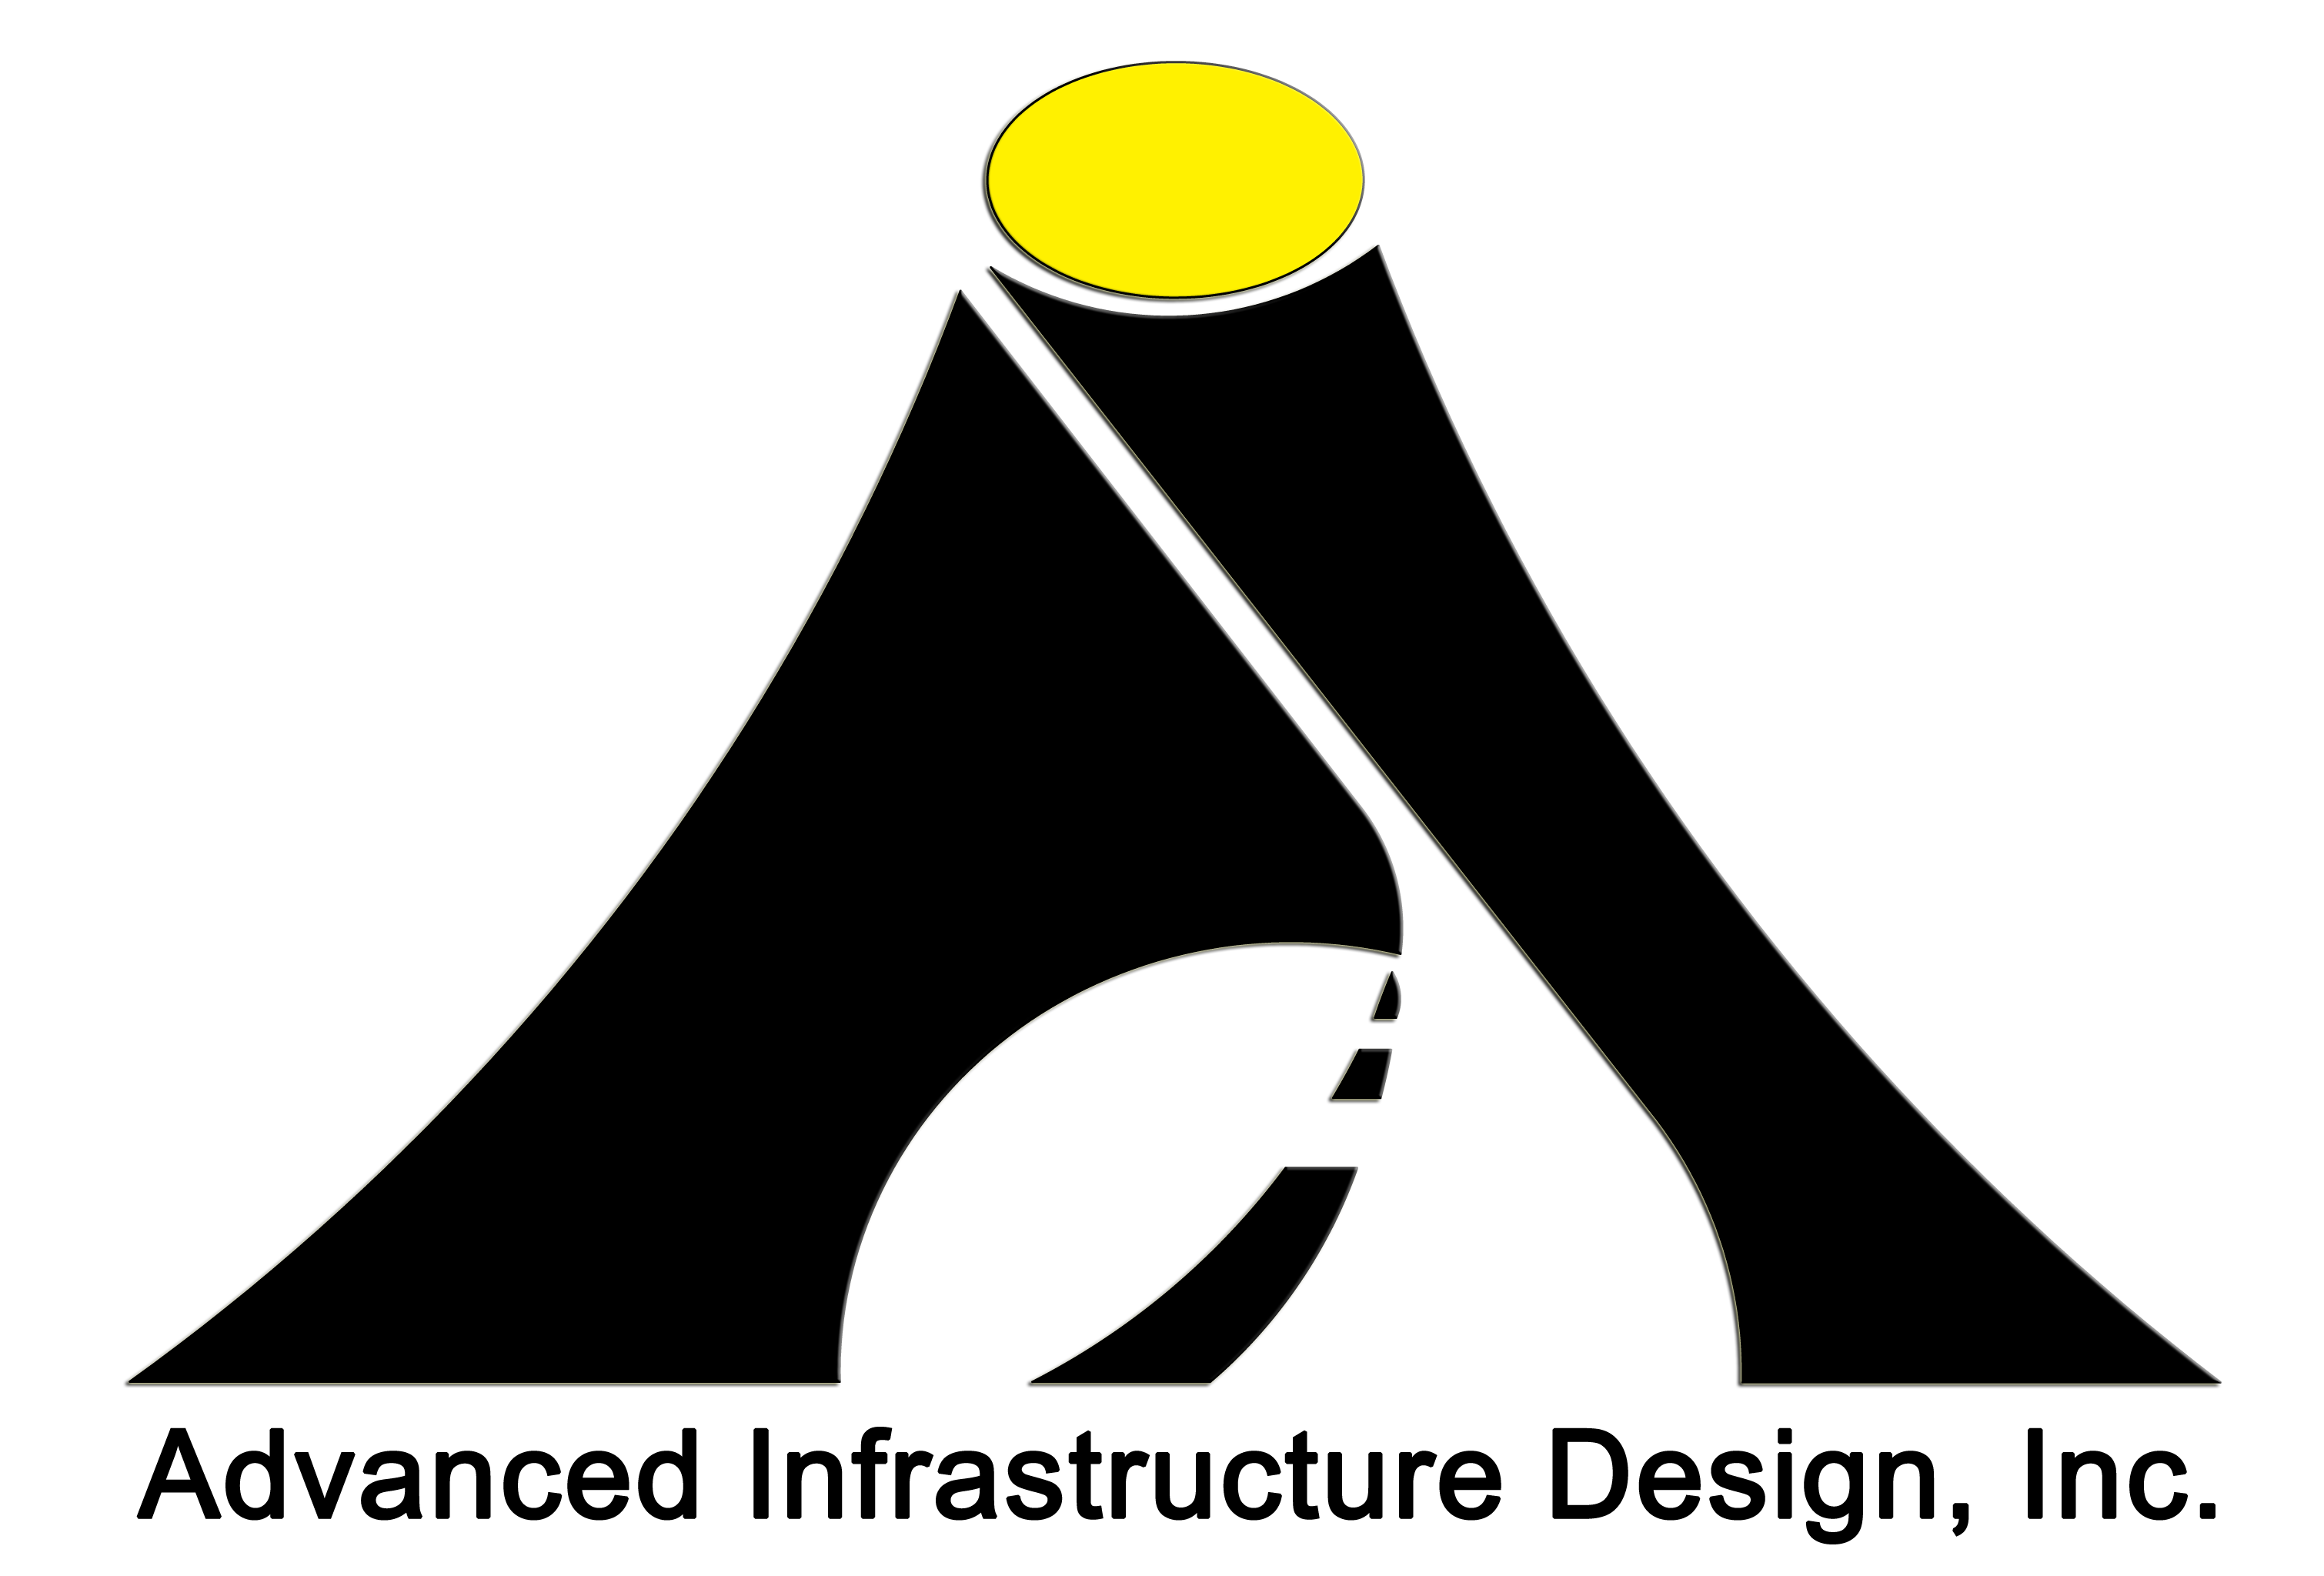 Advanced Infrastructure Design, Inc. (AID)